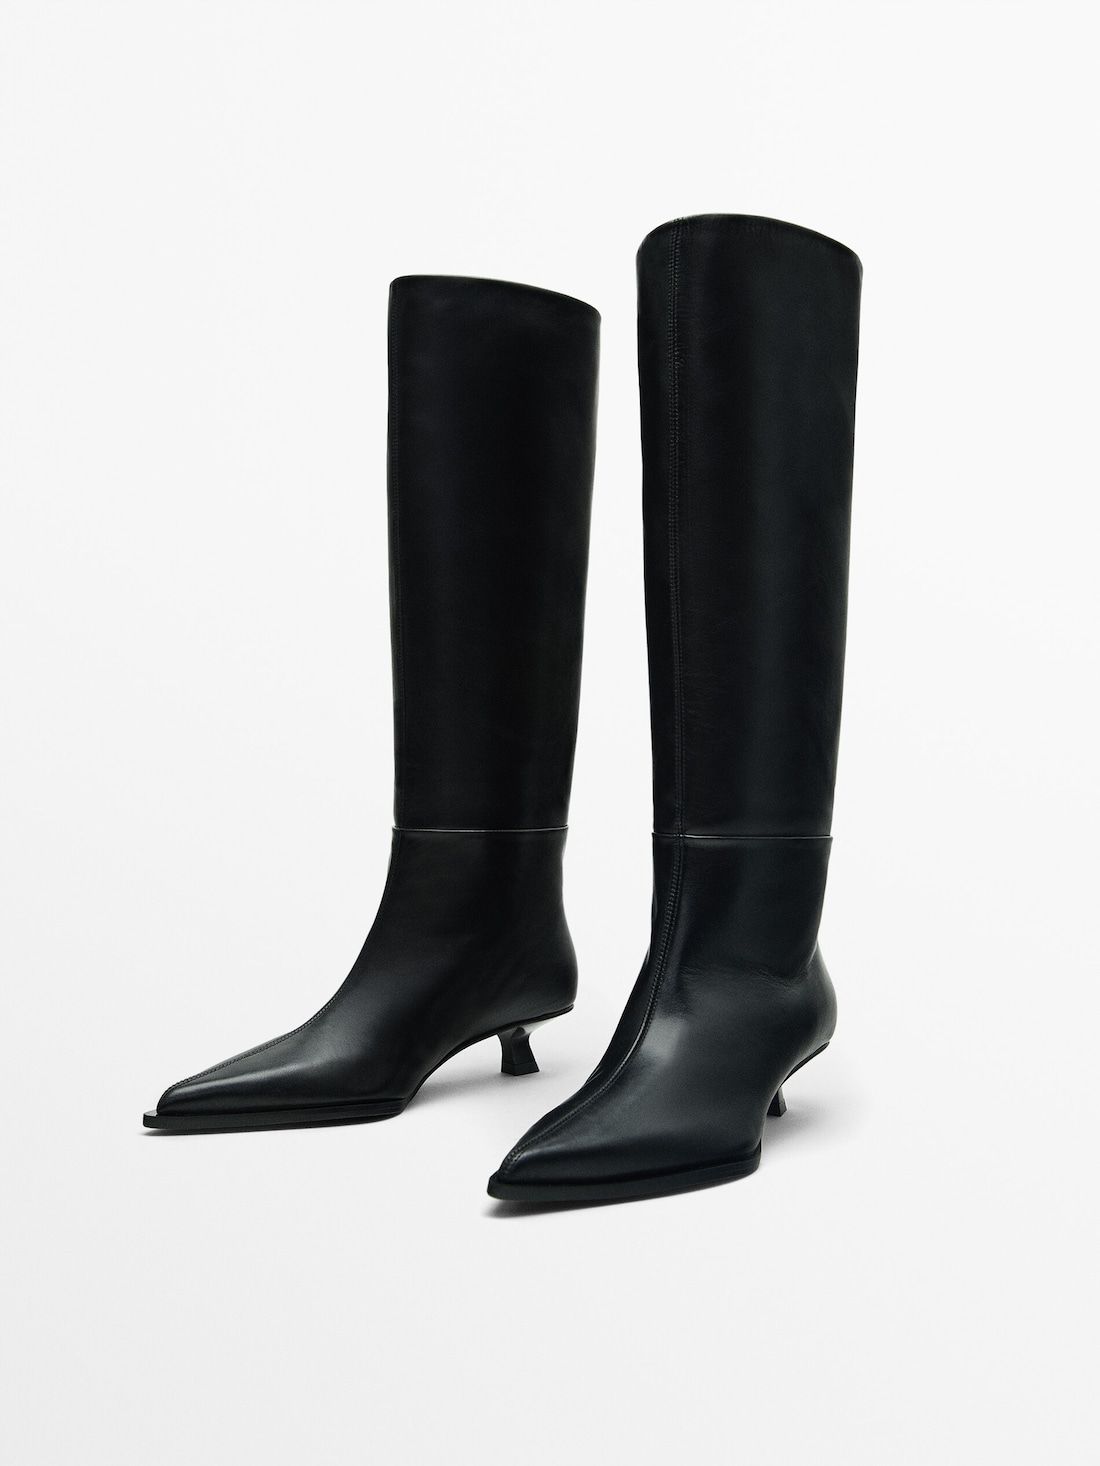 Heeled leather boots - Limited Edition | Massimo Dutti UK